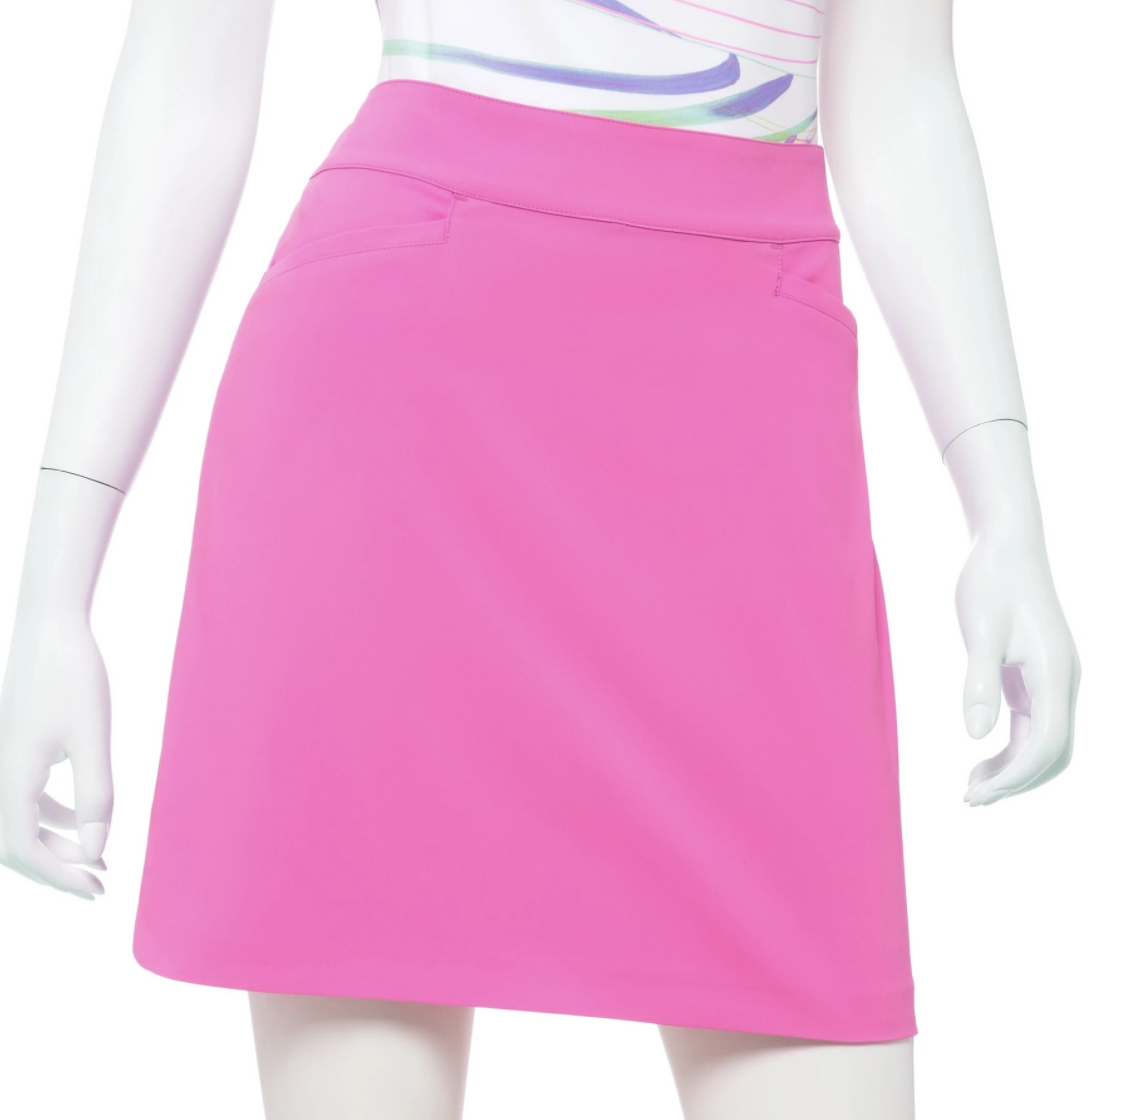 EP Pro NY 19" Tech Strech Women's Golf Skirt W/ Ribbon